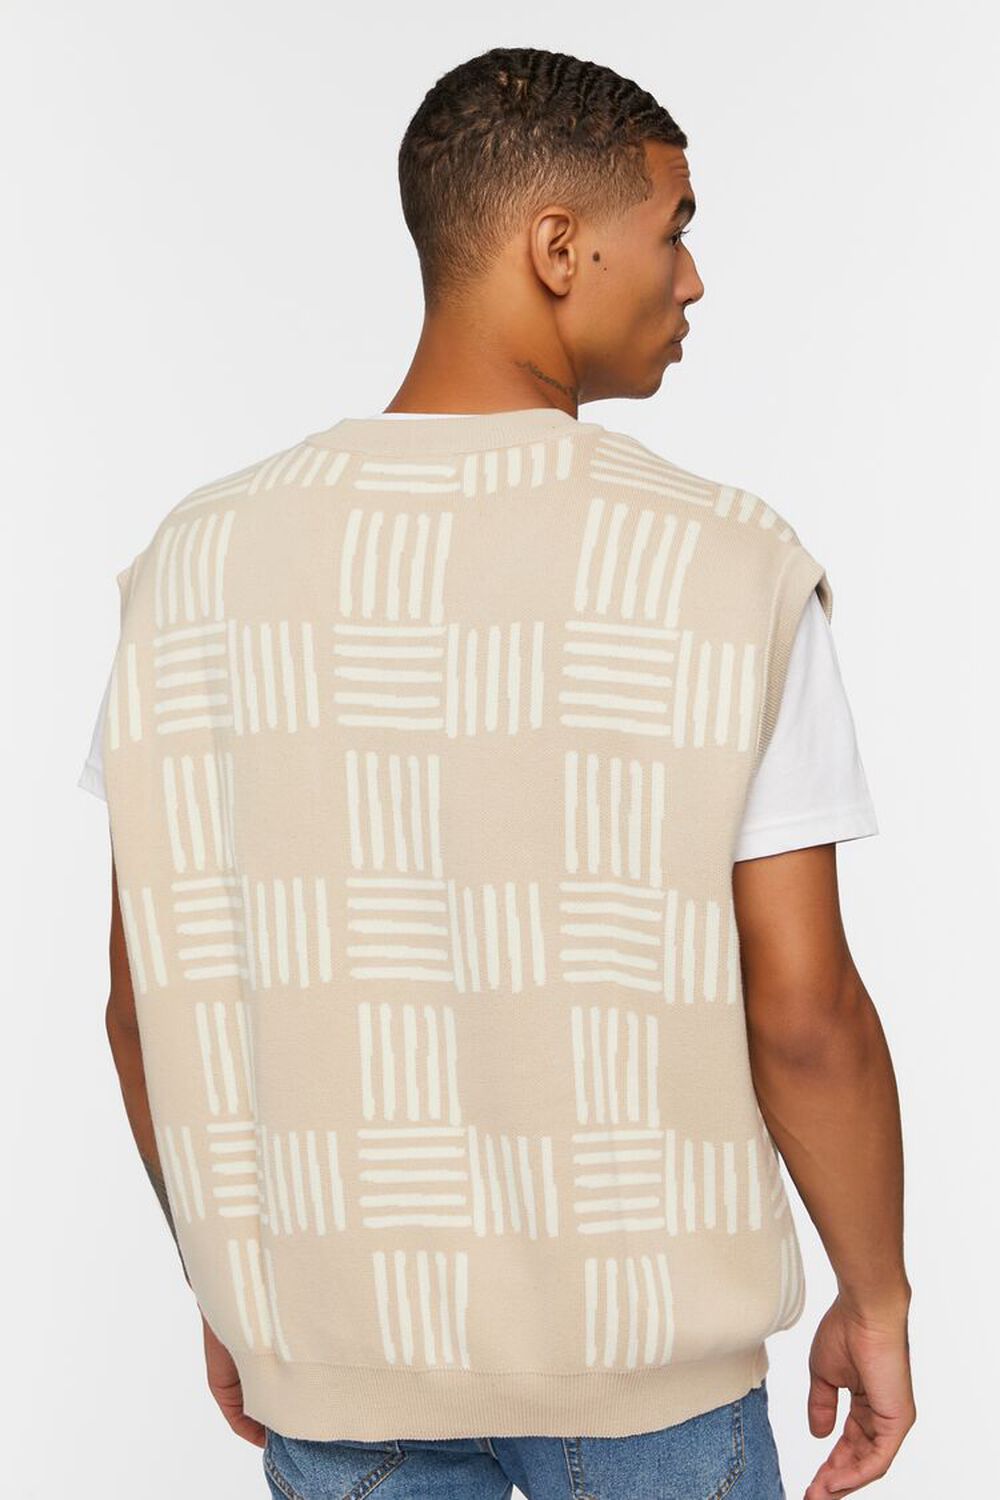 TAUPE/CREAM Checkered Sweater Vest, image 3